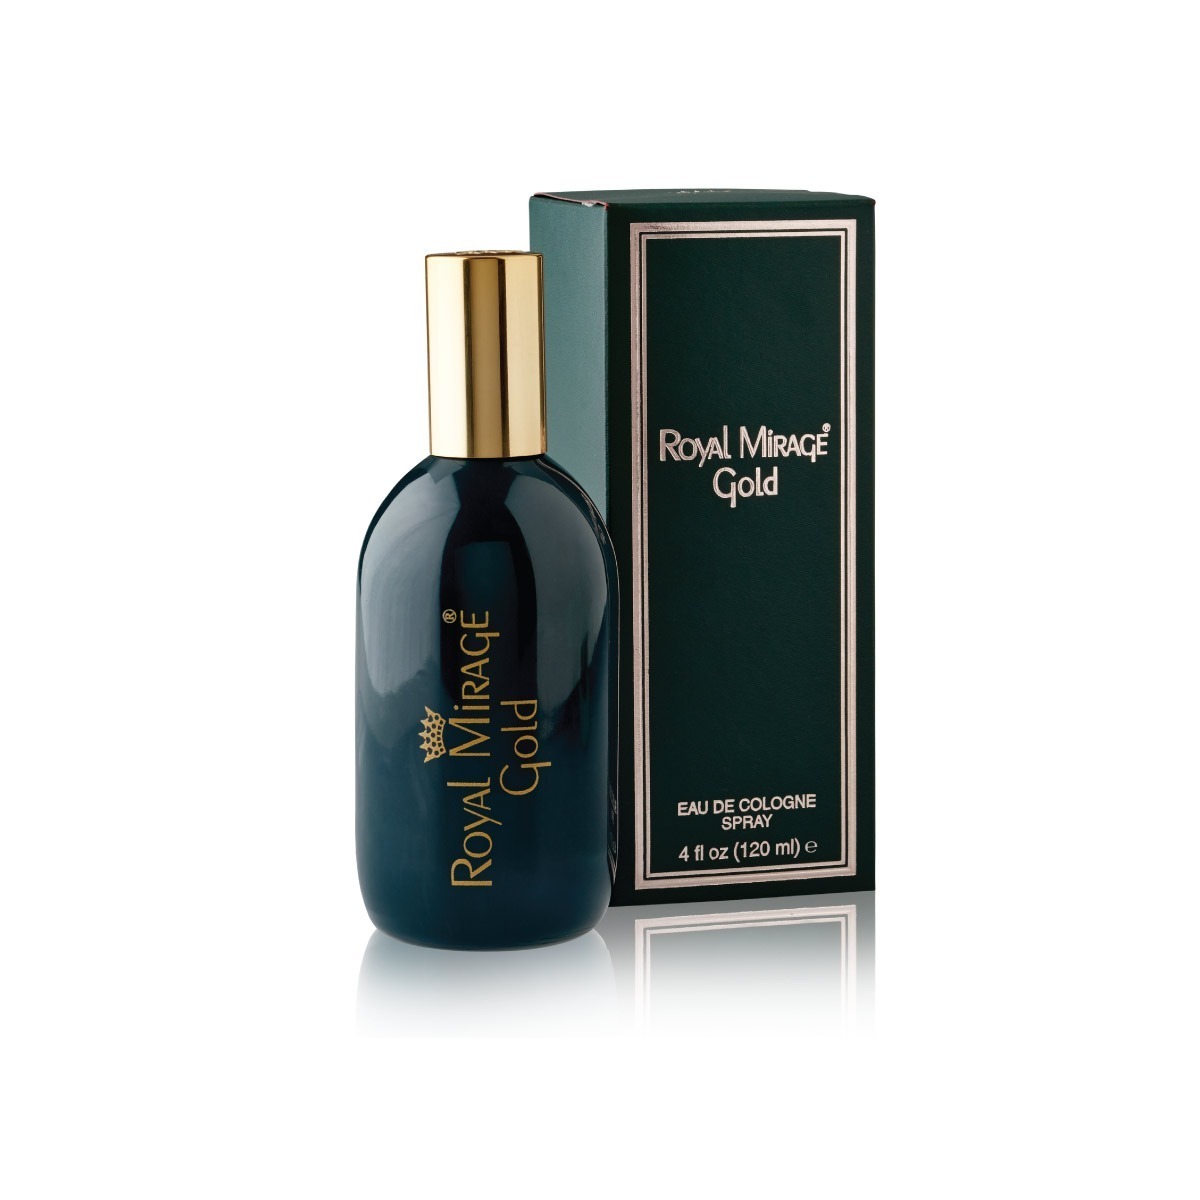 Royal Mirage Perfume 120ML Price in Pakistan